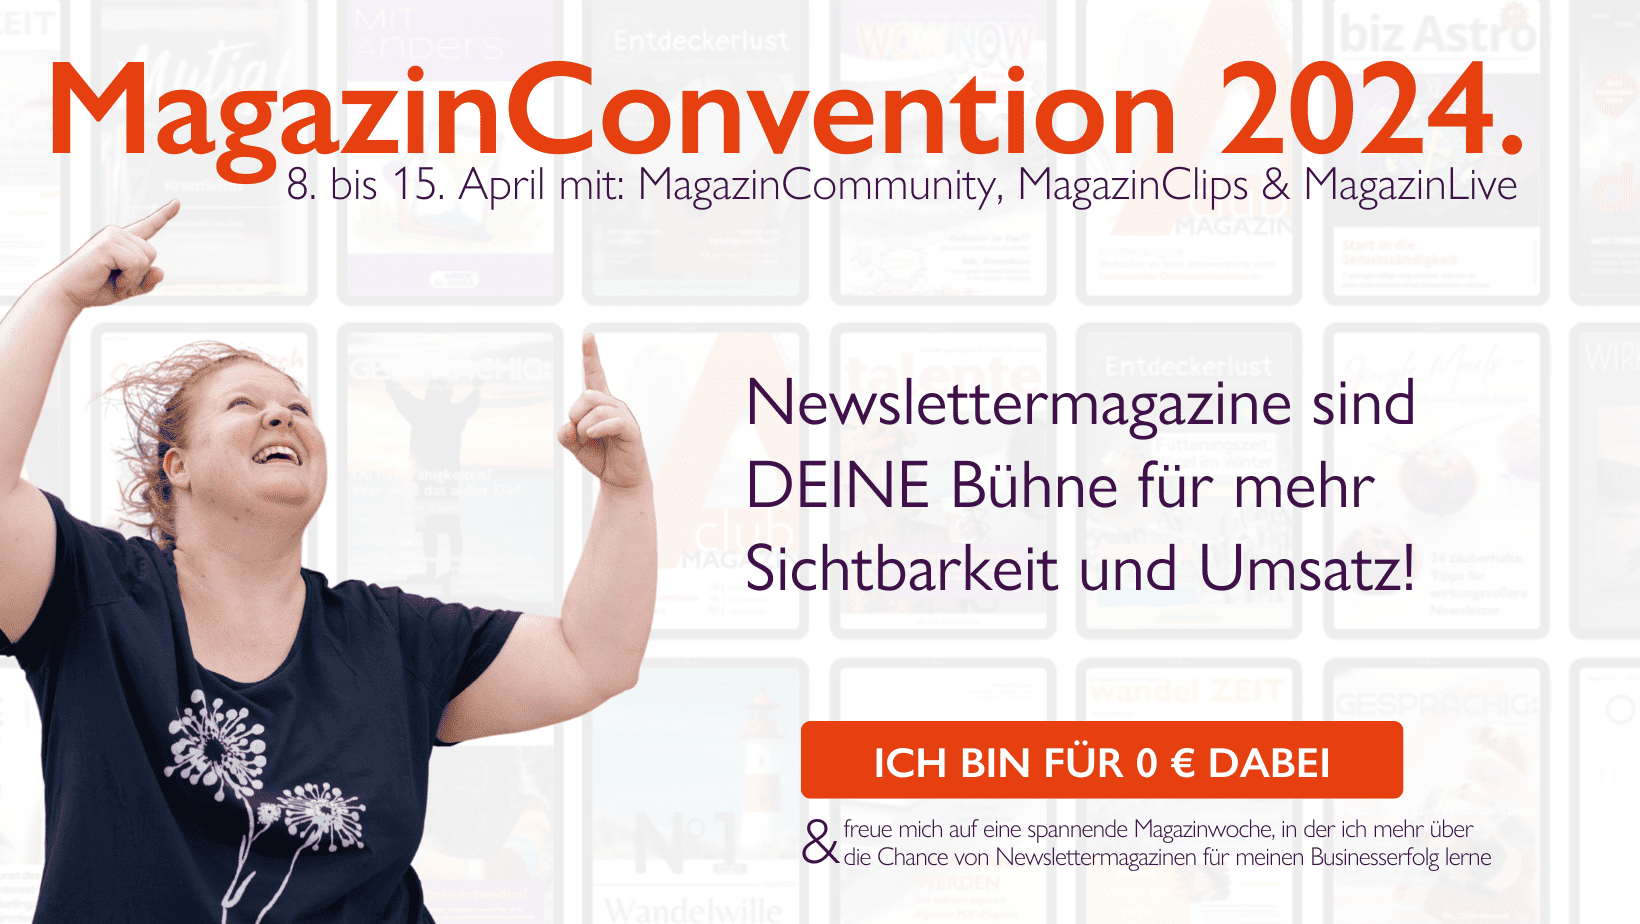 MagazinConvention 2024 – 8. bis 15. April mit MagazinCommunity, MagazinClips & MagazinLive